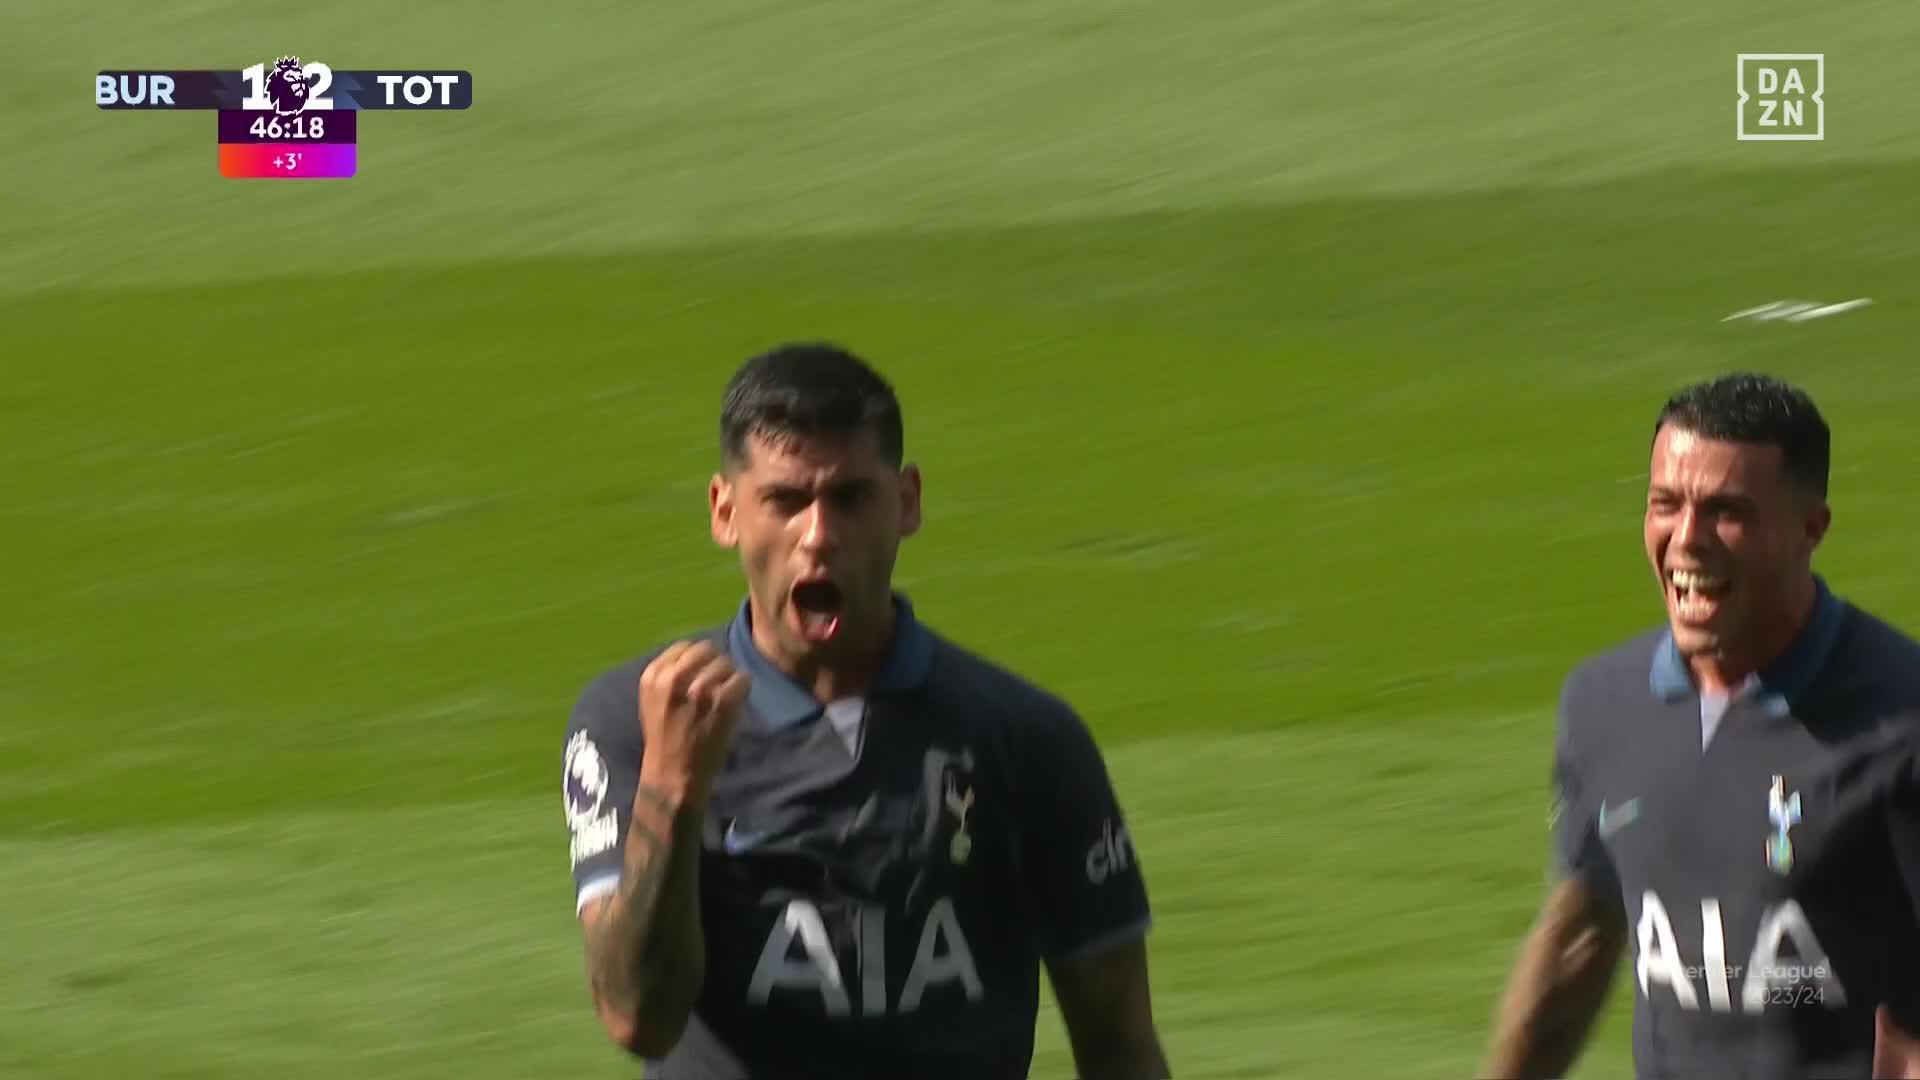 Romero’s strike puts Tottenham in front of Burnley